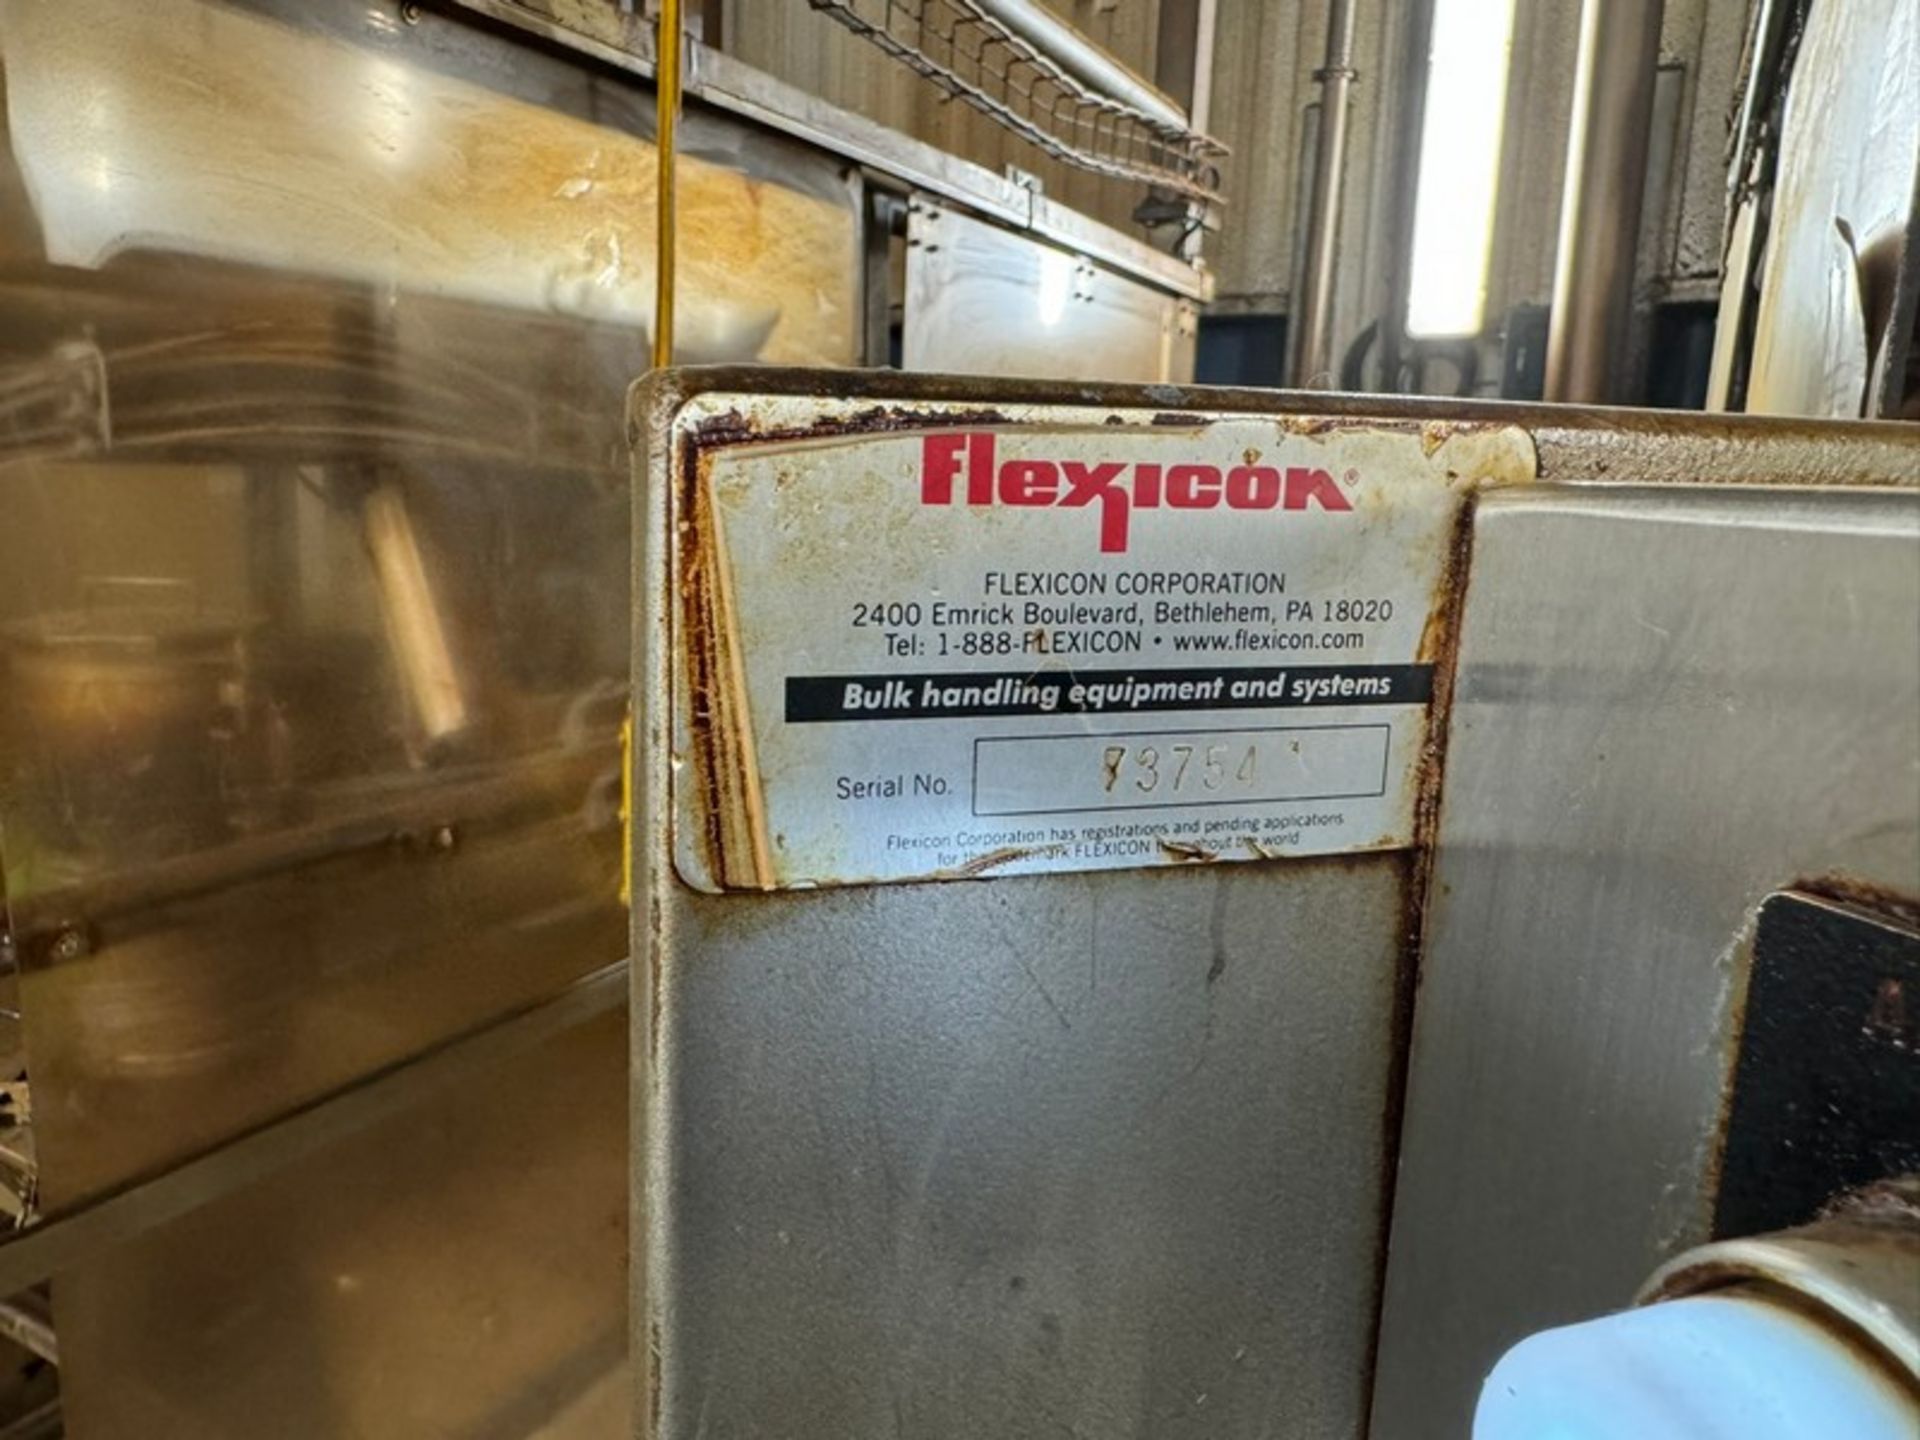 Flexicon Super Sac Unloading Station, S/N 73754, Includes Harrington 2-Ton Hoist, S/S Super Sac - Image 6 of 11